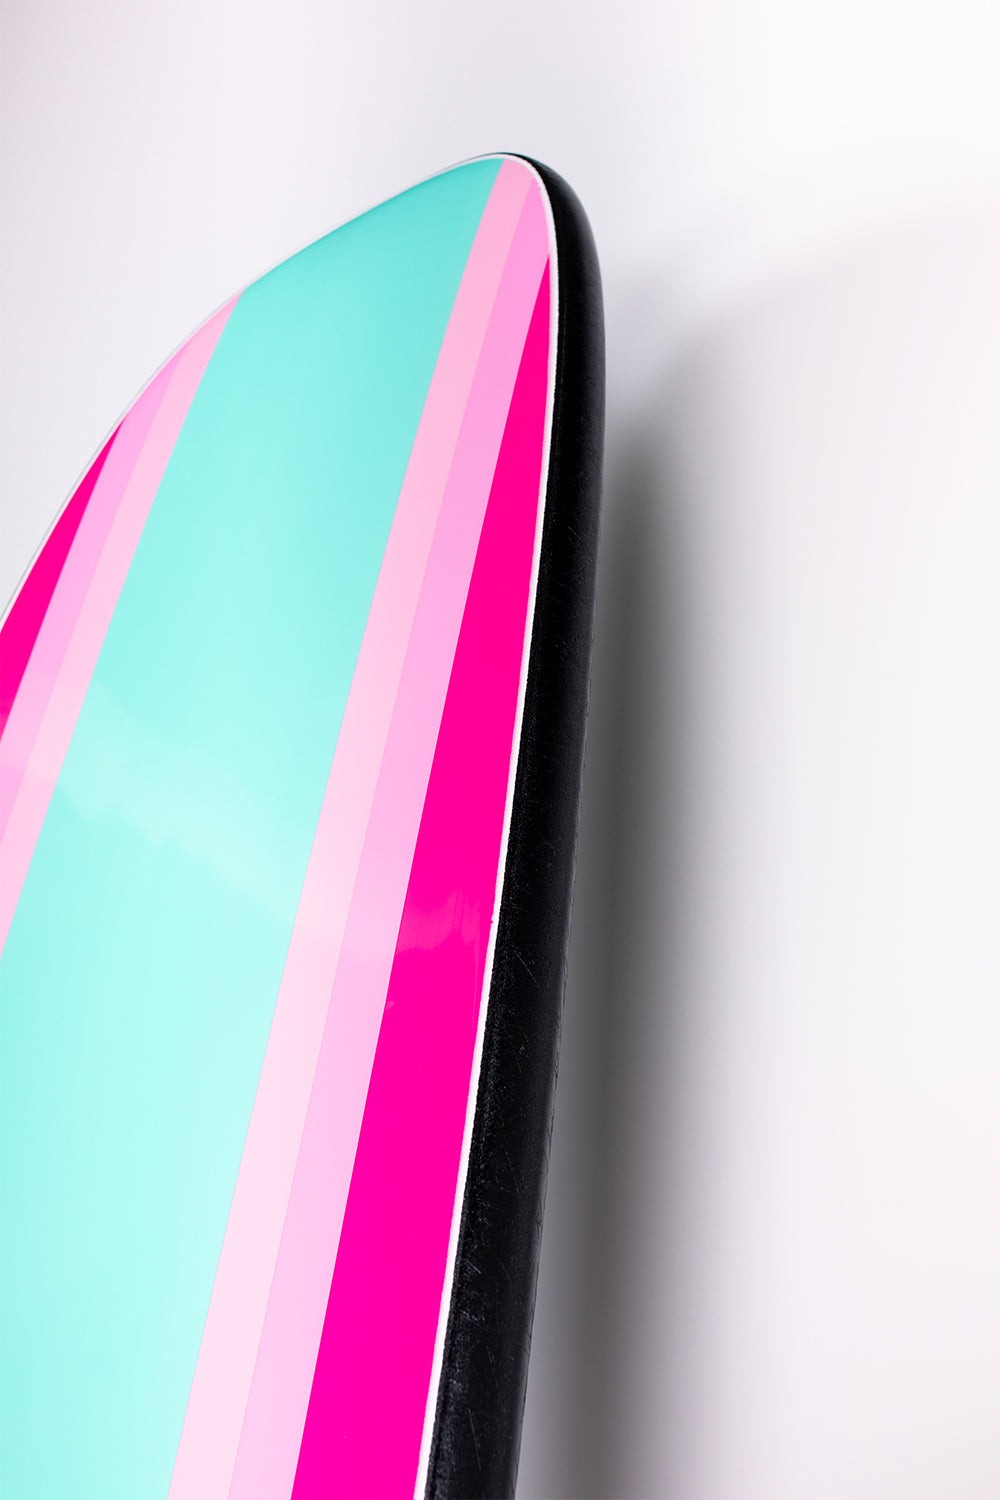 
                  
                    Pukas Surf Shop - Catch Surf - NOSERIDER SINGLE FIN Black Turquoise - 8'6" x 22,90" x 3,15" x 80l.
                  
                